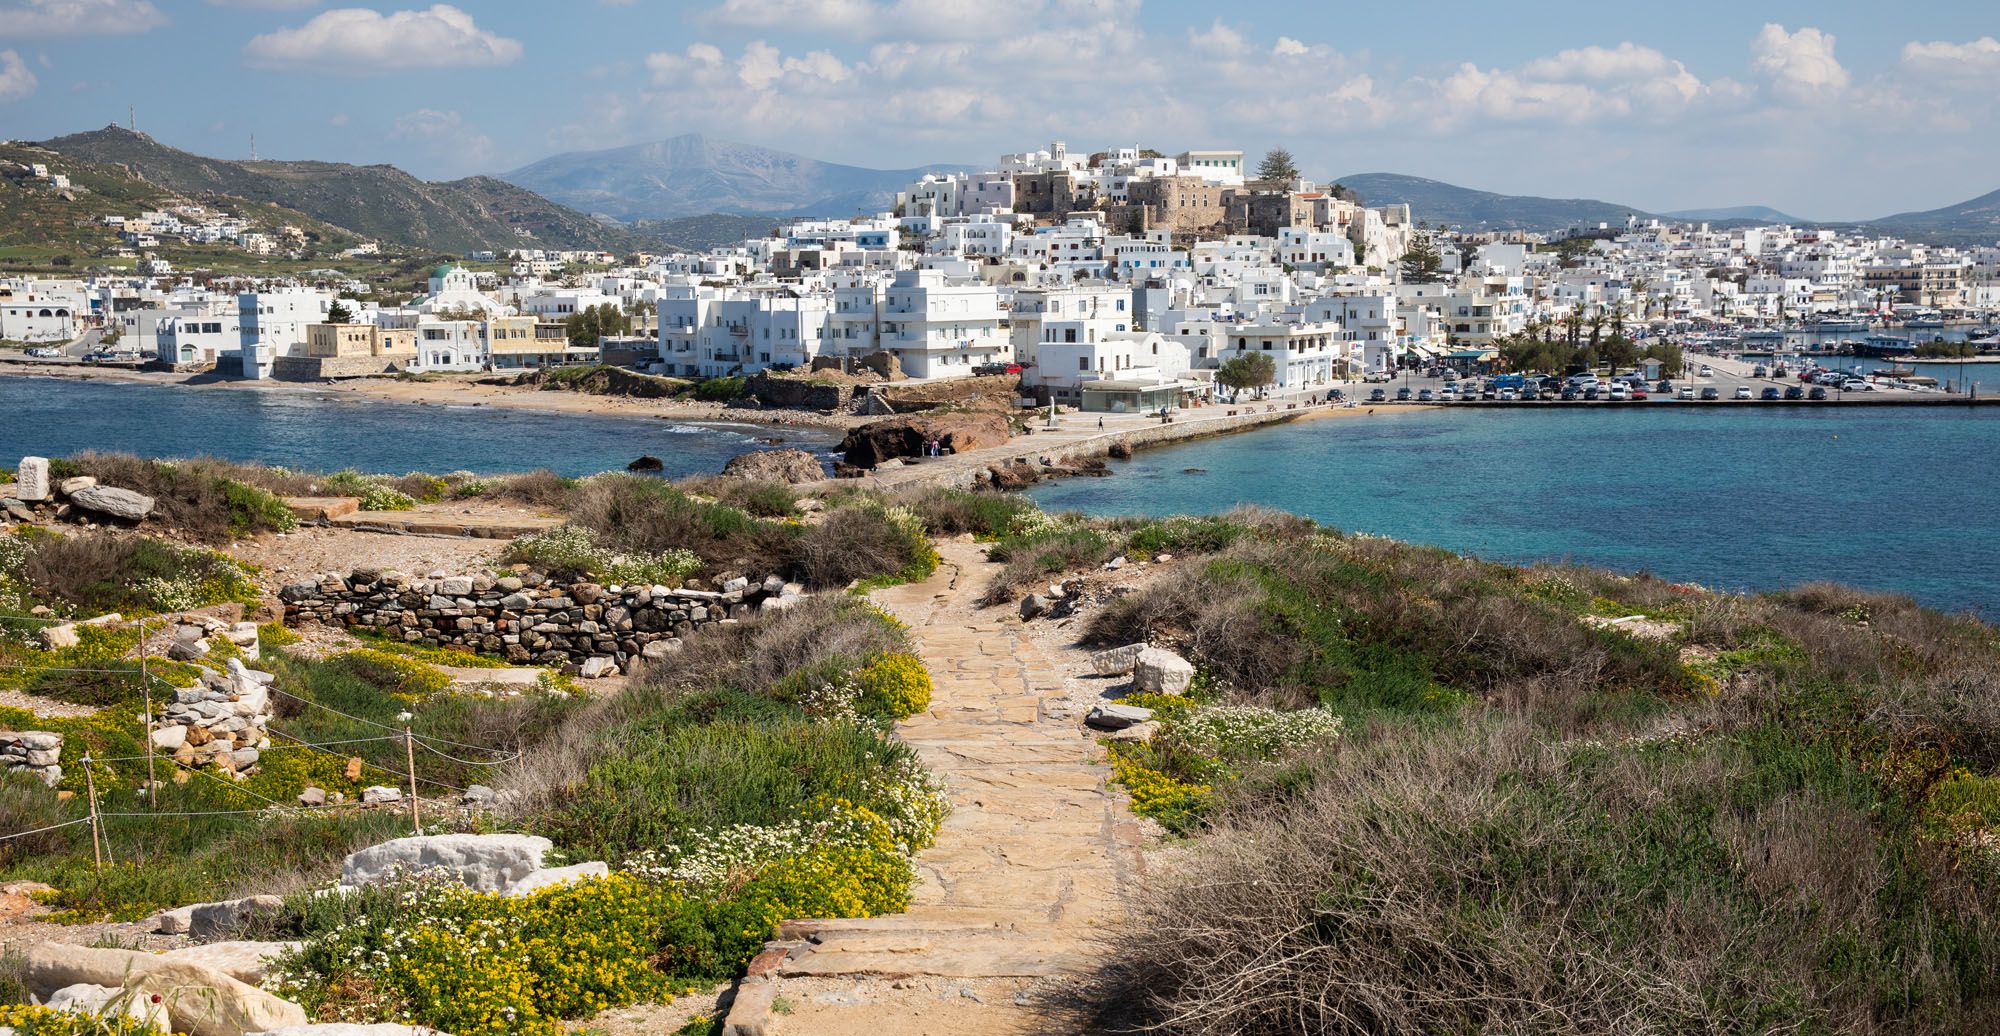  Aktivitas yang dapat dilakukan di Pulau Naxos, Yunani